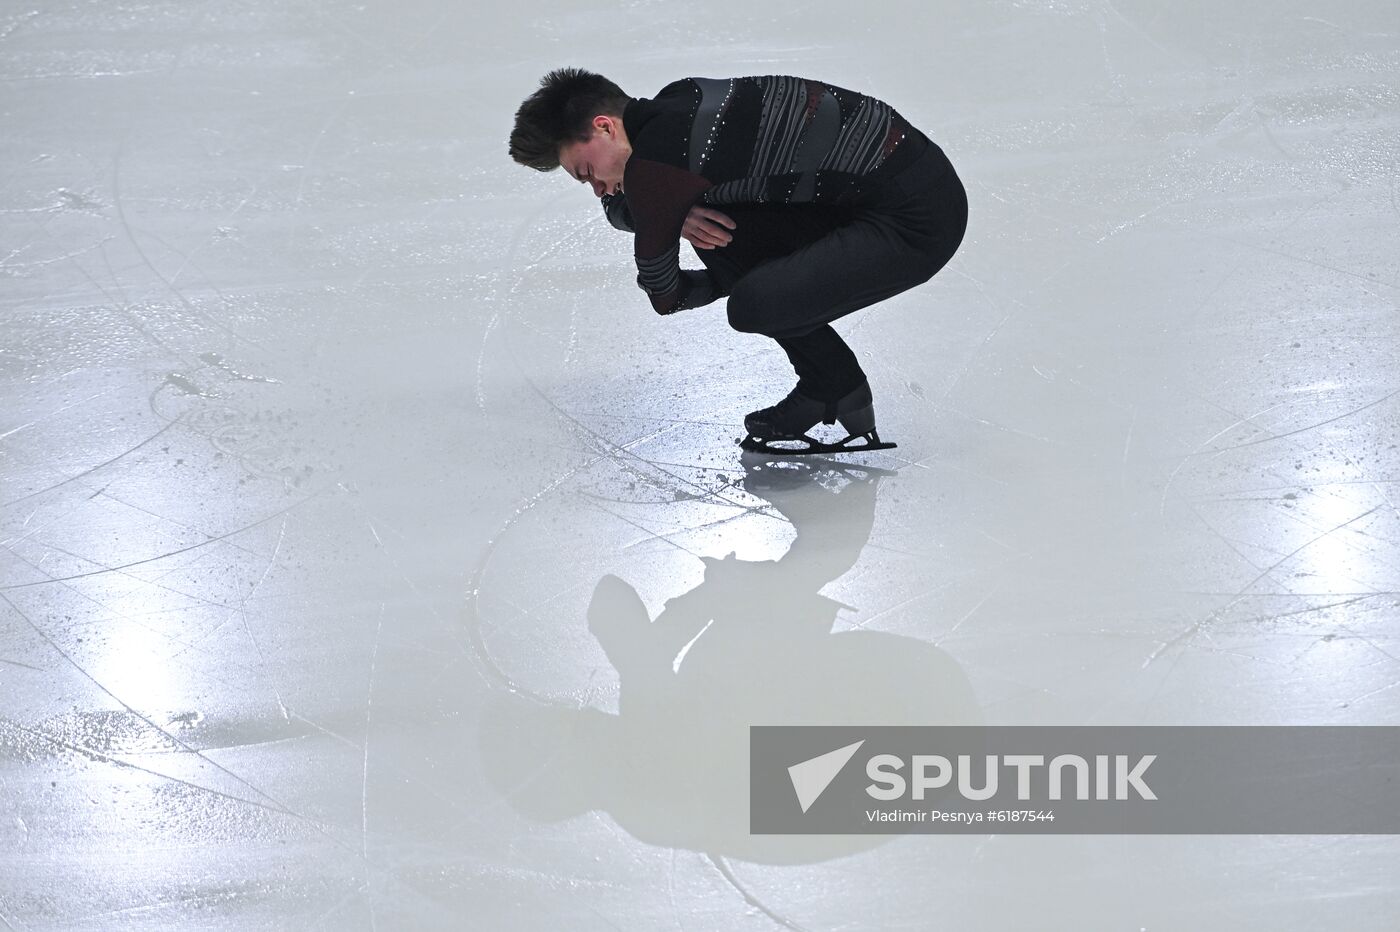 Estonia Figure Skating Worlds Junior Men